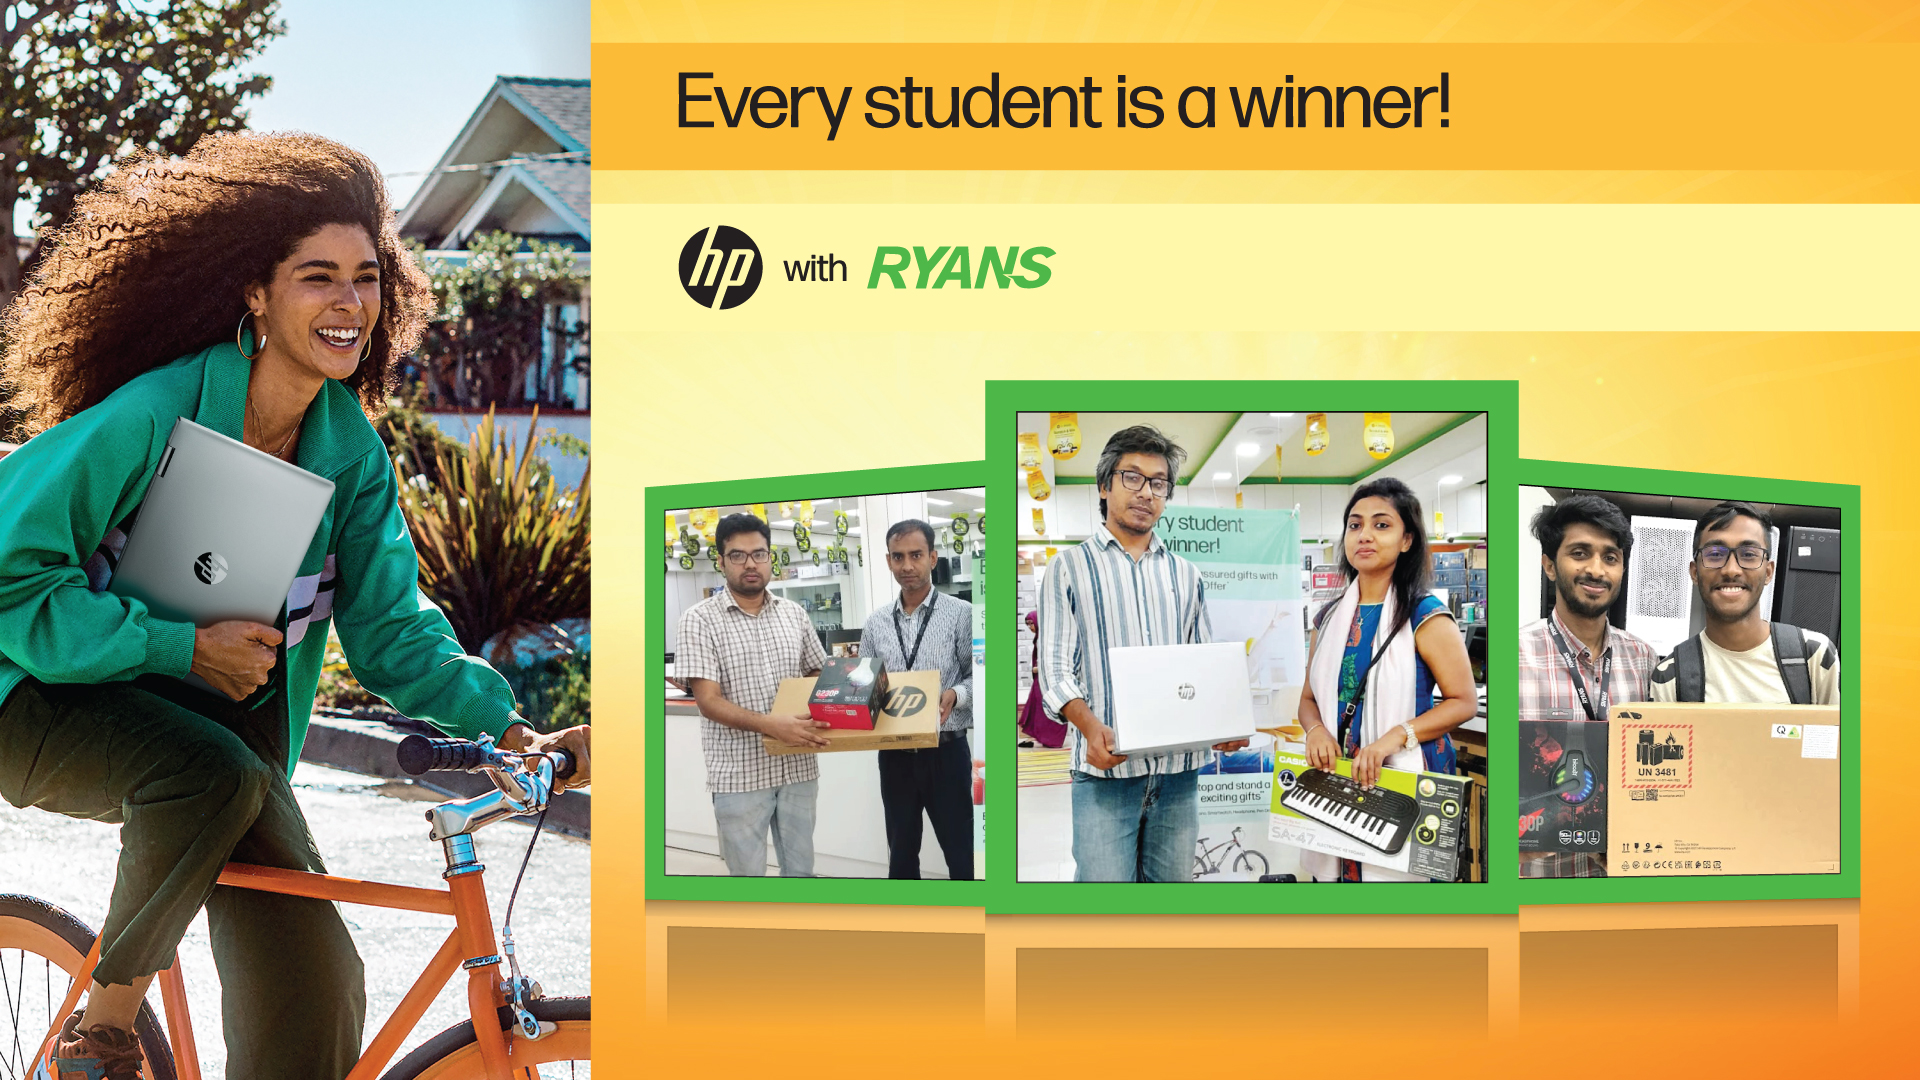 HP Student Offer: মাসব্যাপী RYANS-HP যৌথ উদ্যোগে হয়ে গেল এক সফল আয়োজন